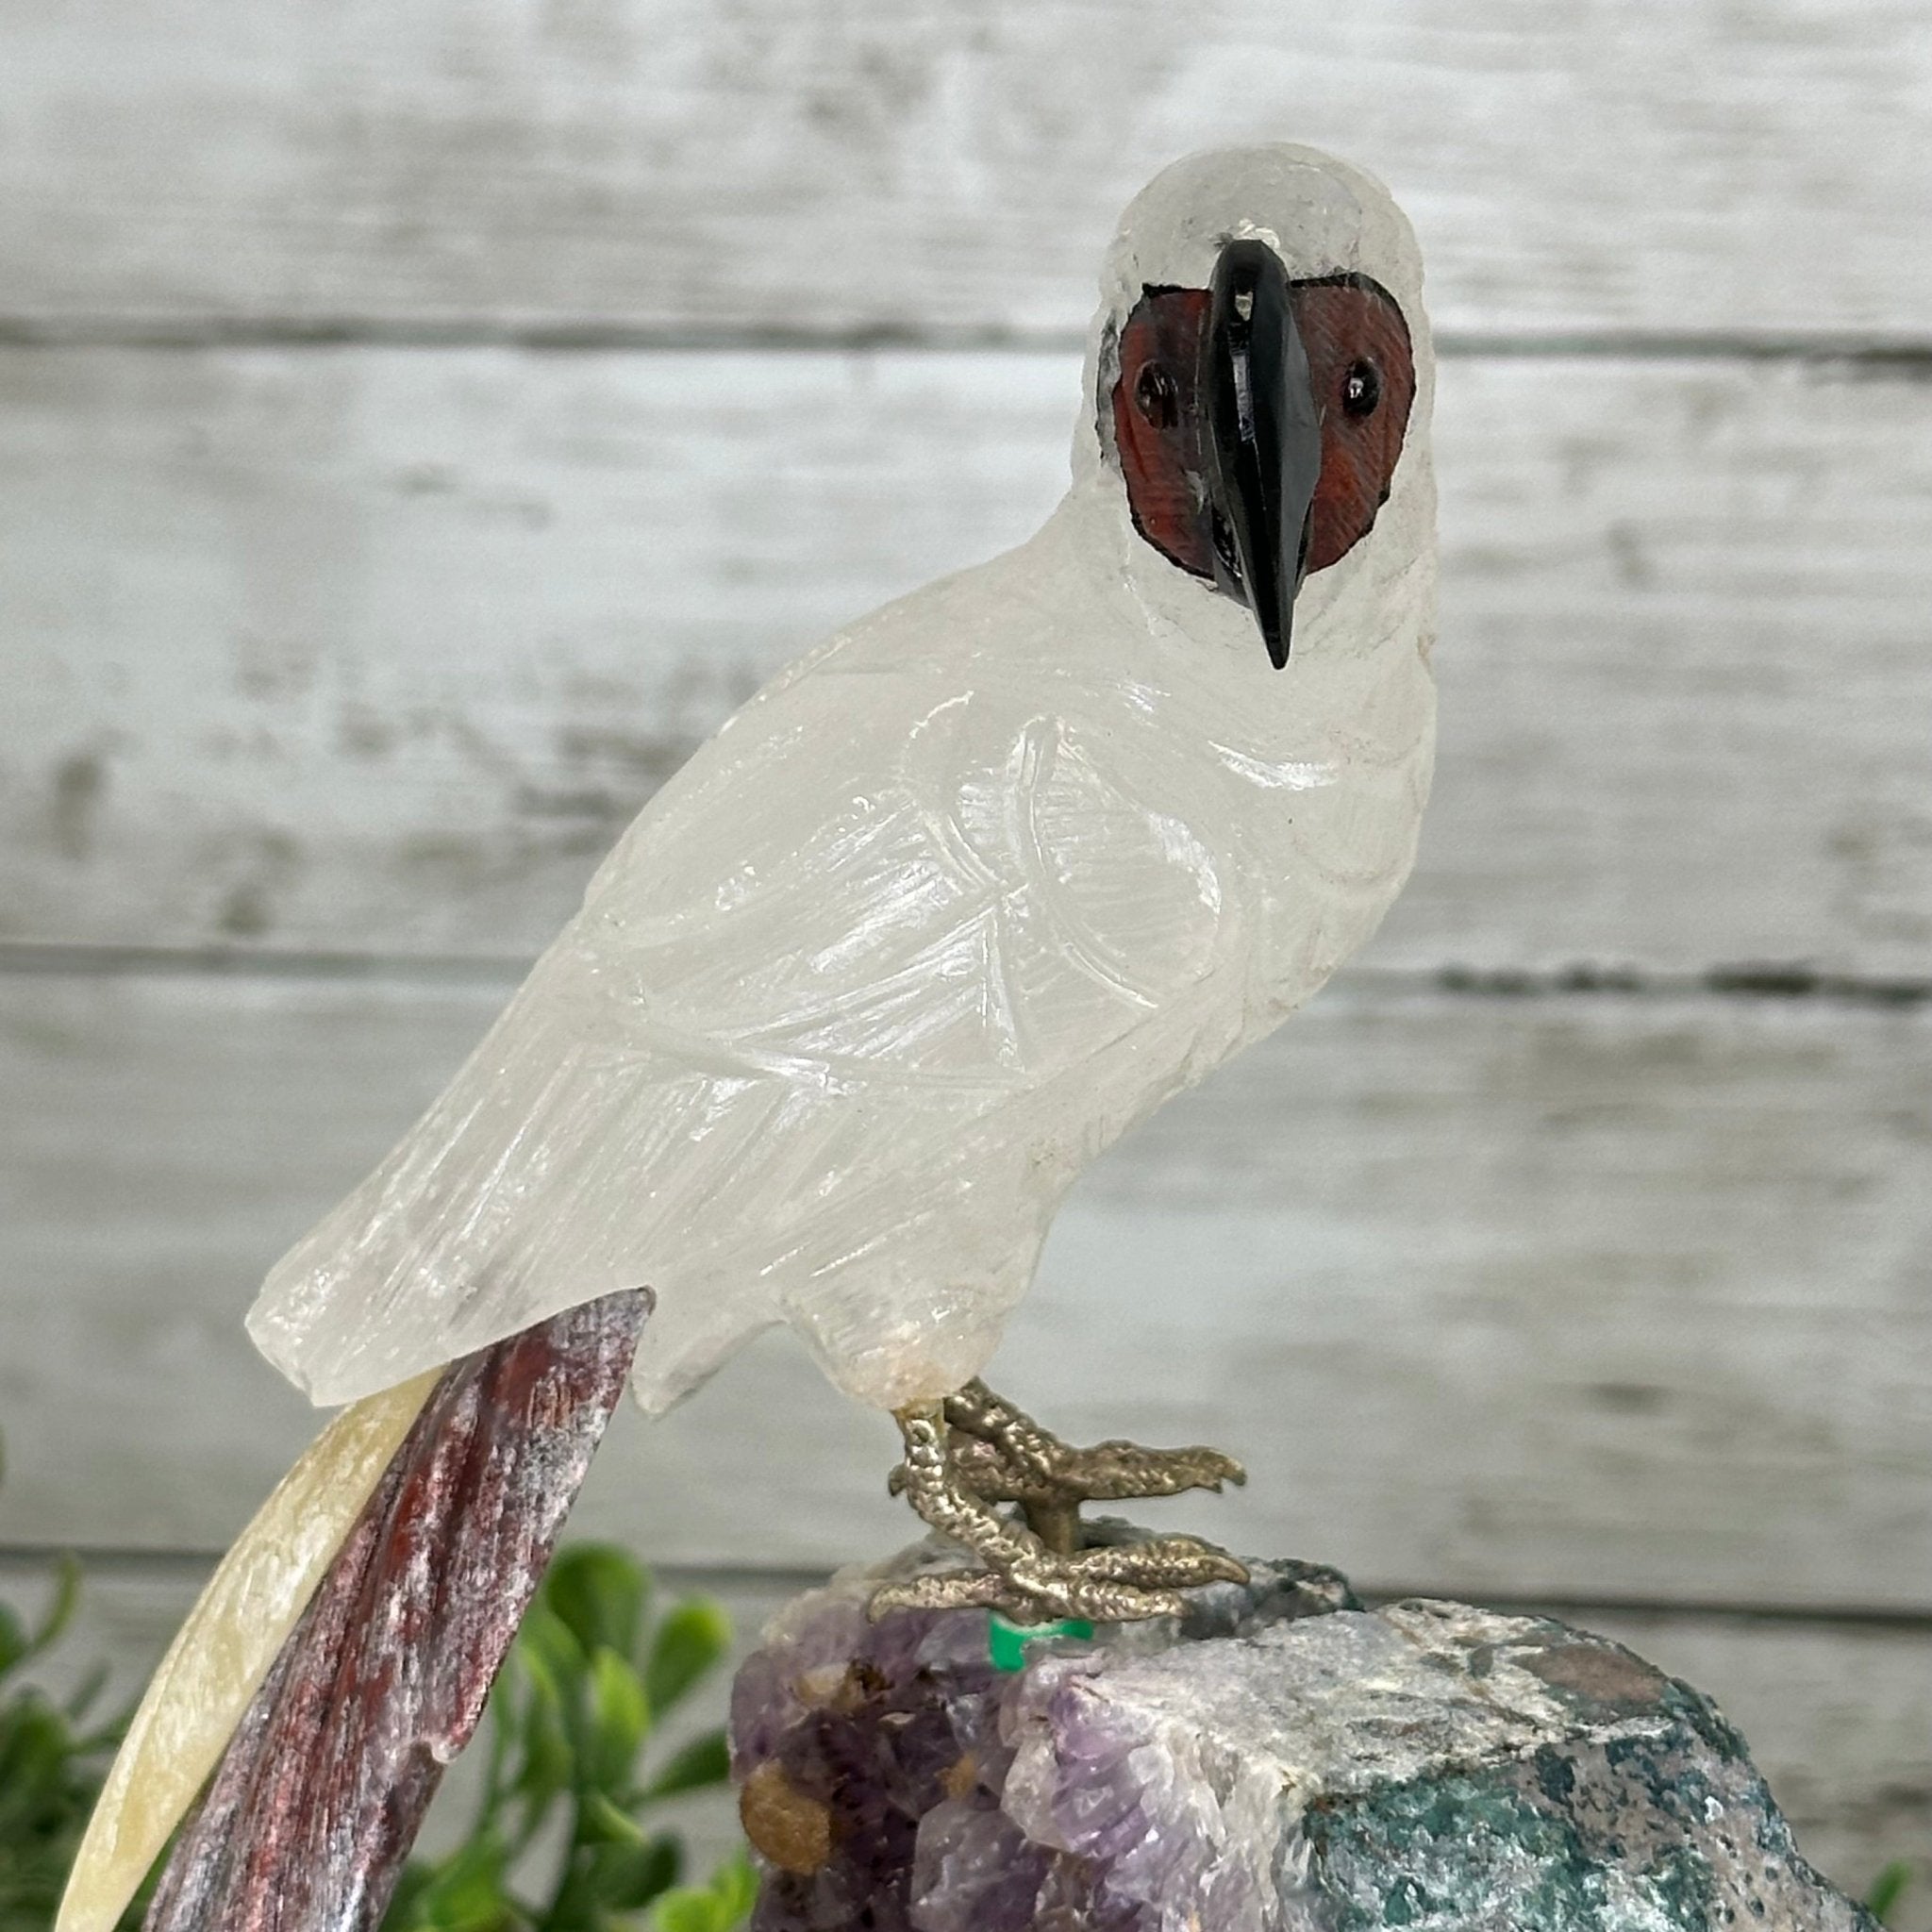 Hand-Carved Clear Quartz Parrot Bird 7.5" Long on an Amethyst Base, #3004-CQPAM-018 - Brazil GemsBrazil GemsHand-Carved Clear Quartz Parrot Bird 7.5" Long on an Amethyst Base, #3004-CQPAM-018Crystal Birds3004-CQPAM-018